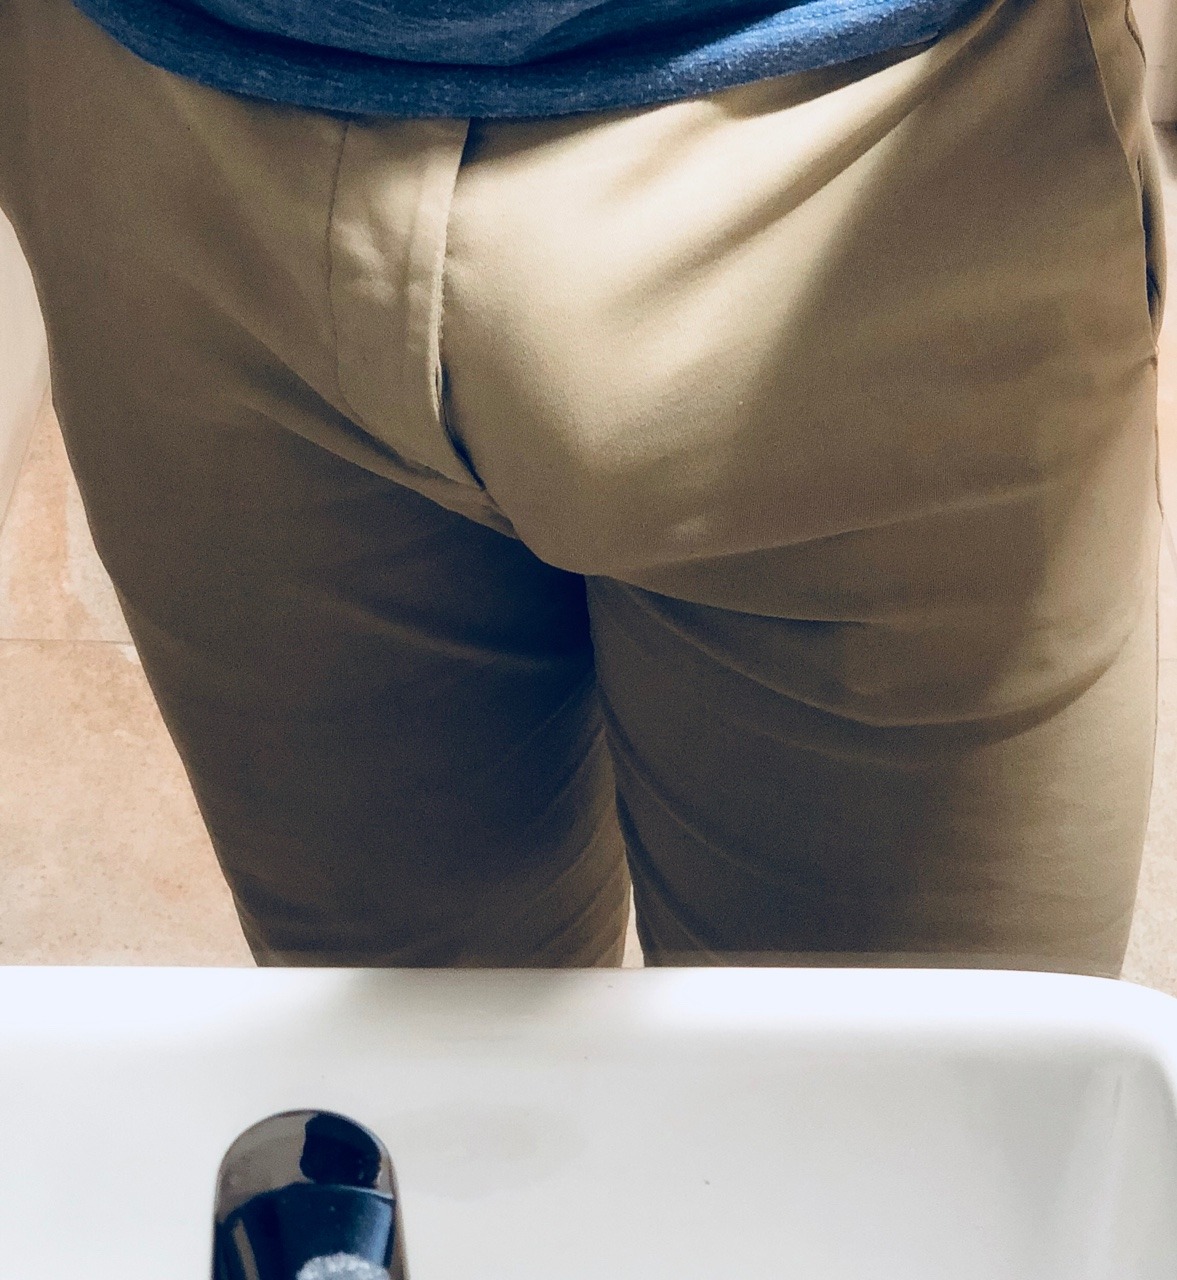 galleries pants boner bulge selfie